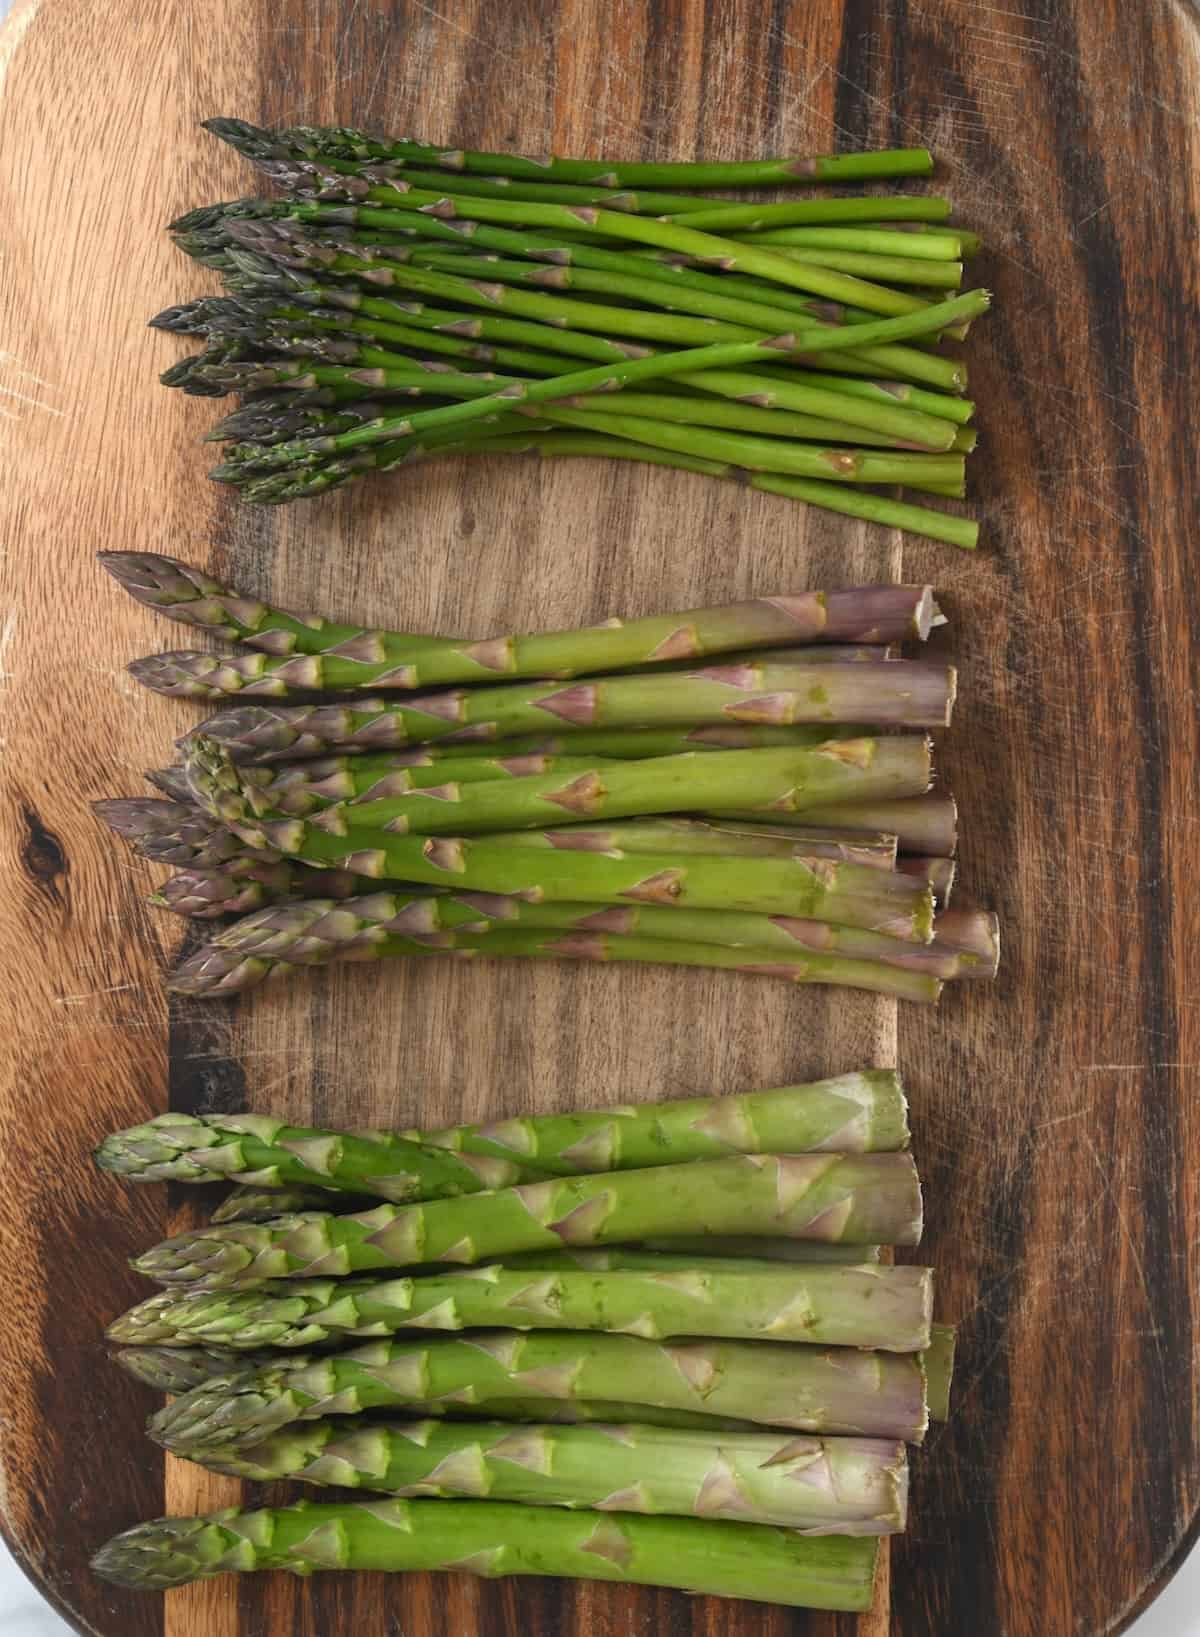 Different sizes of asparagus stalks